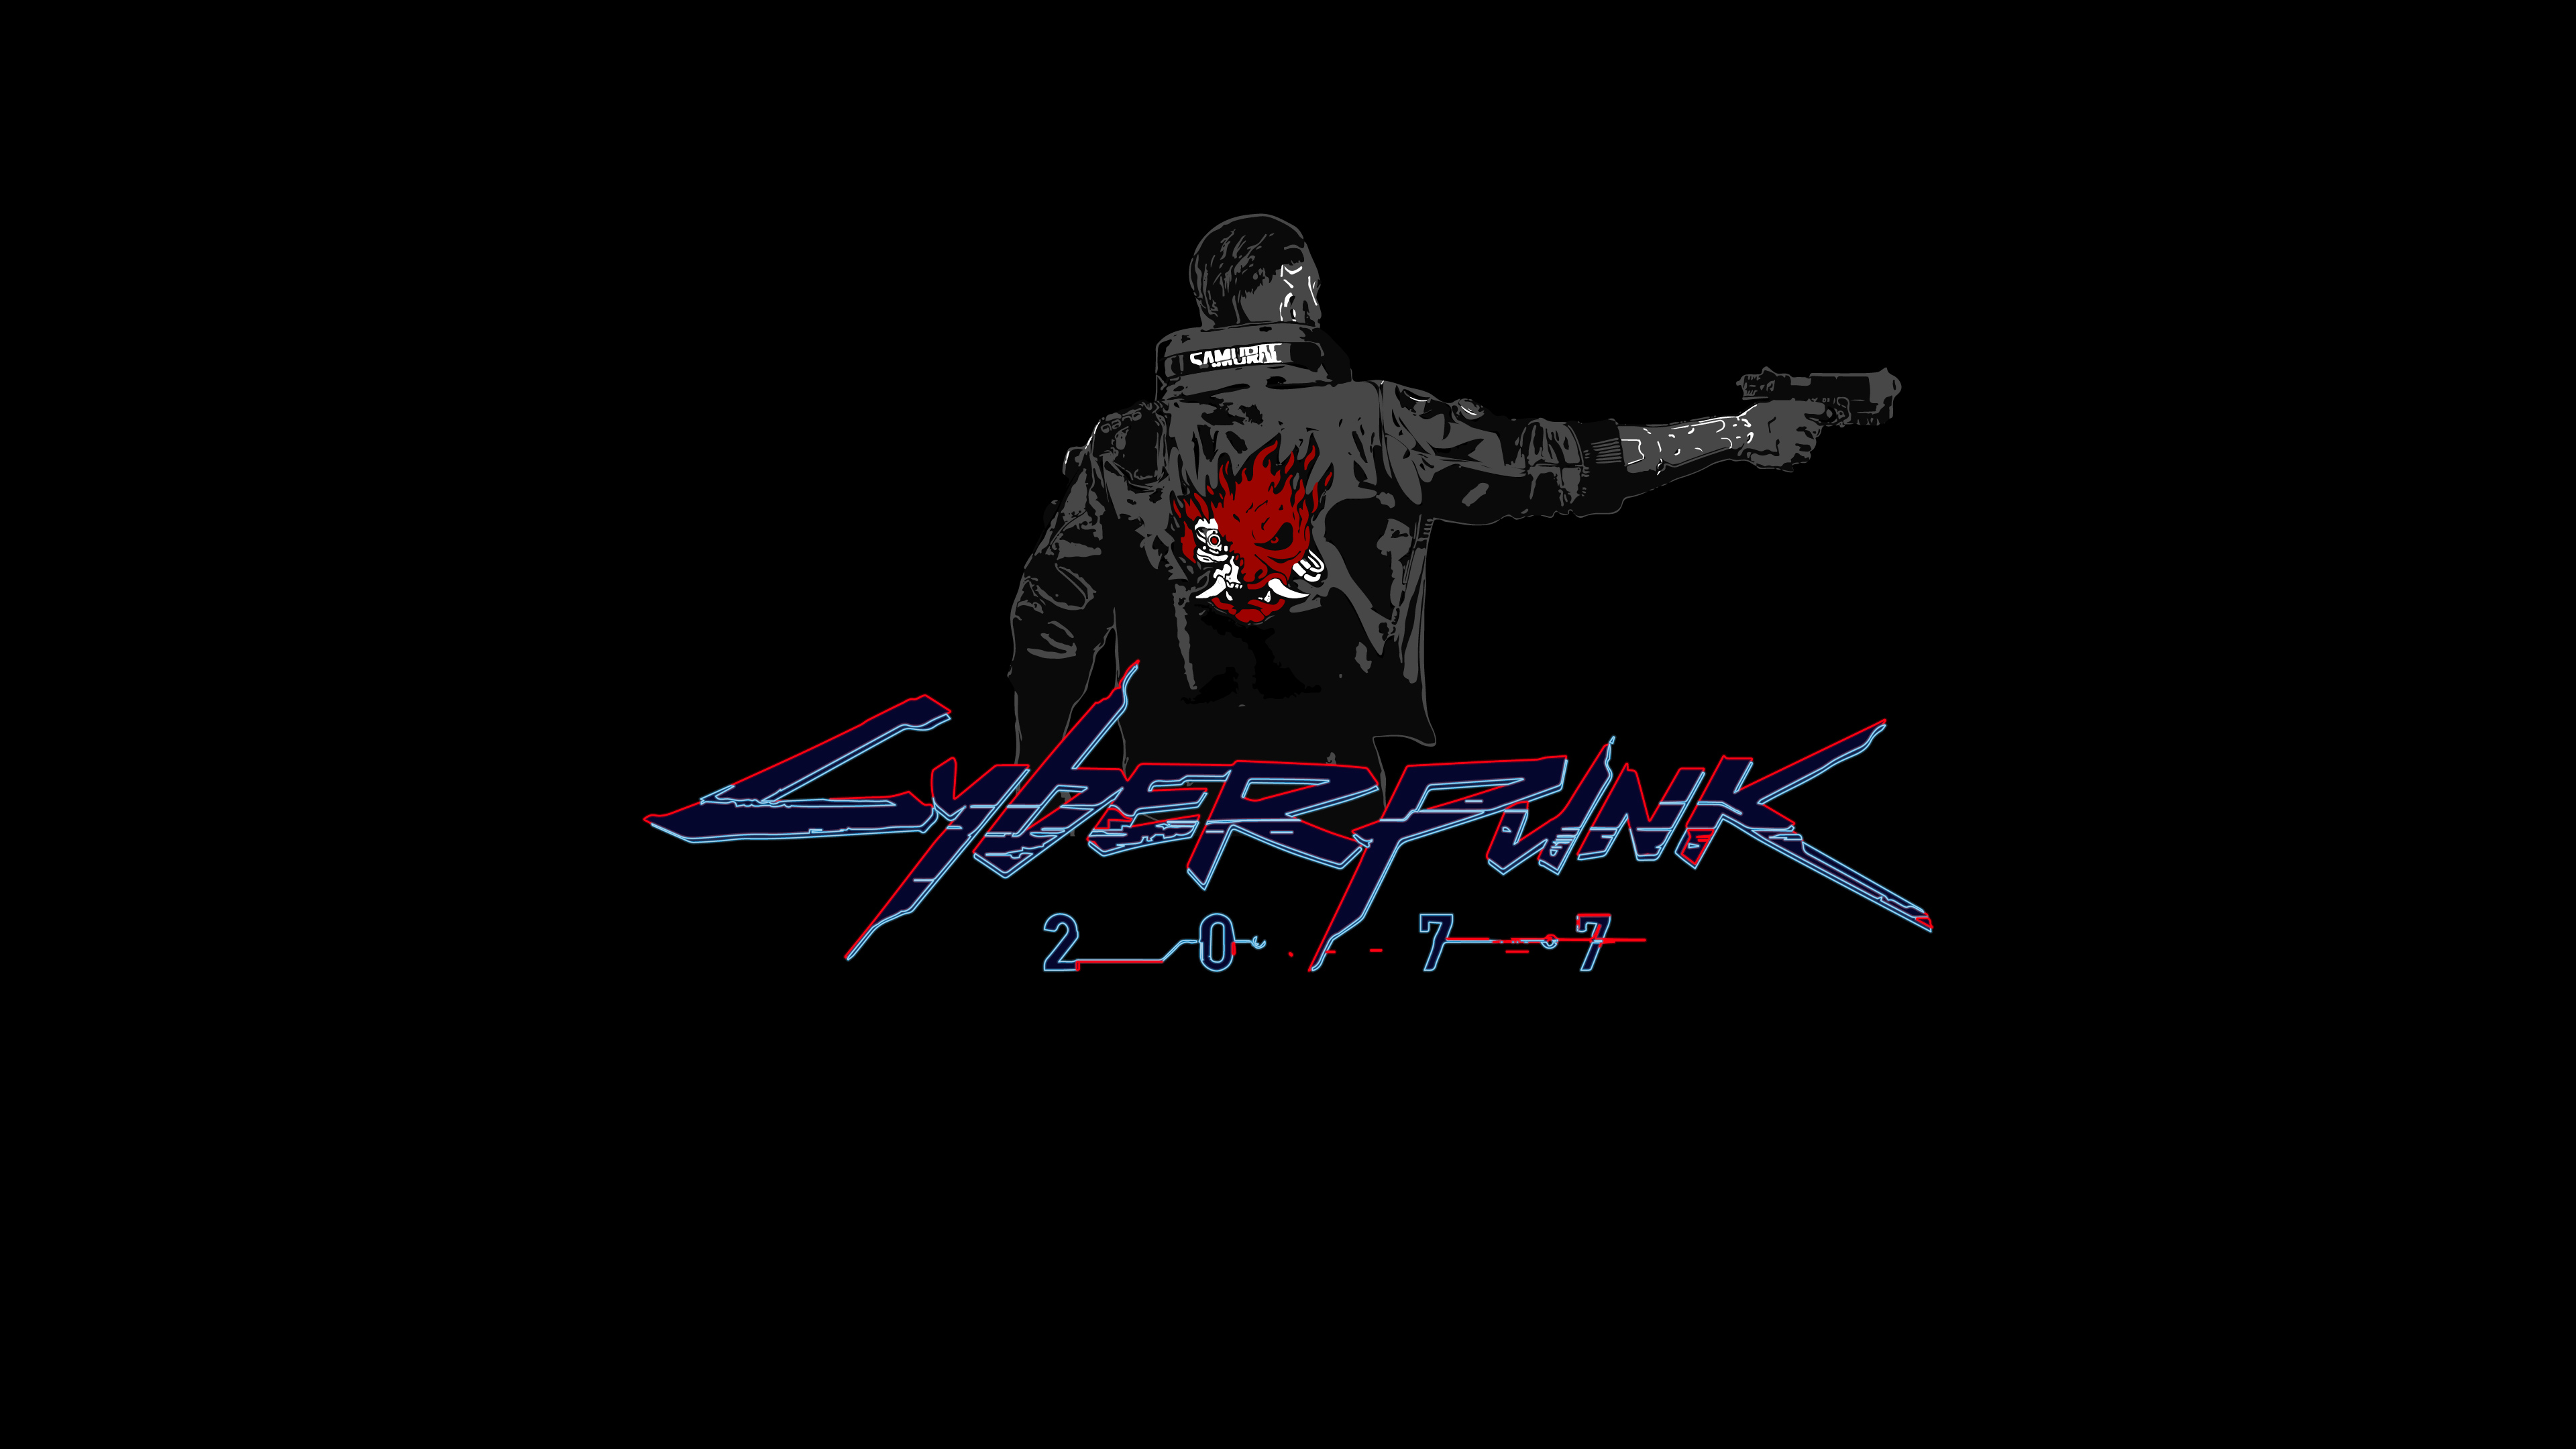 Cyberpunk logo wallpaper фото 50